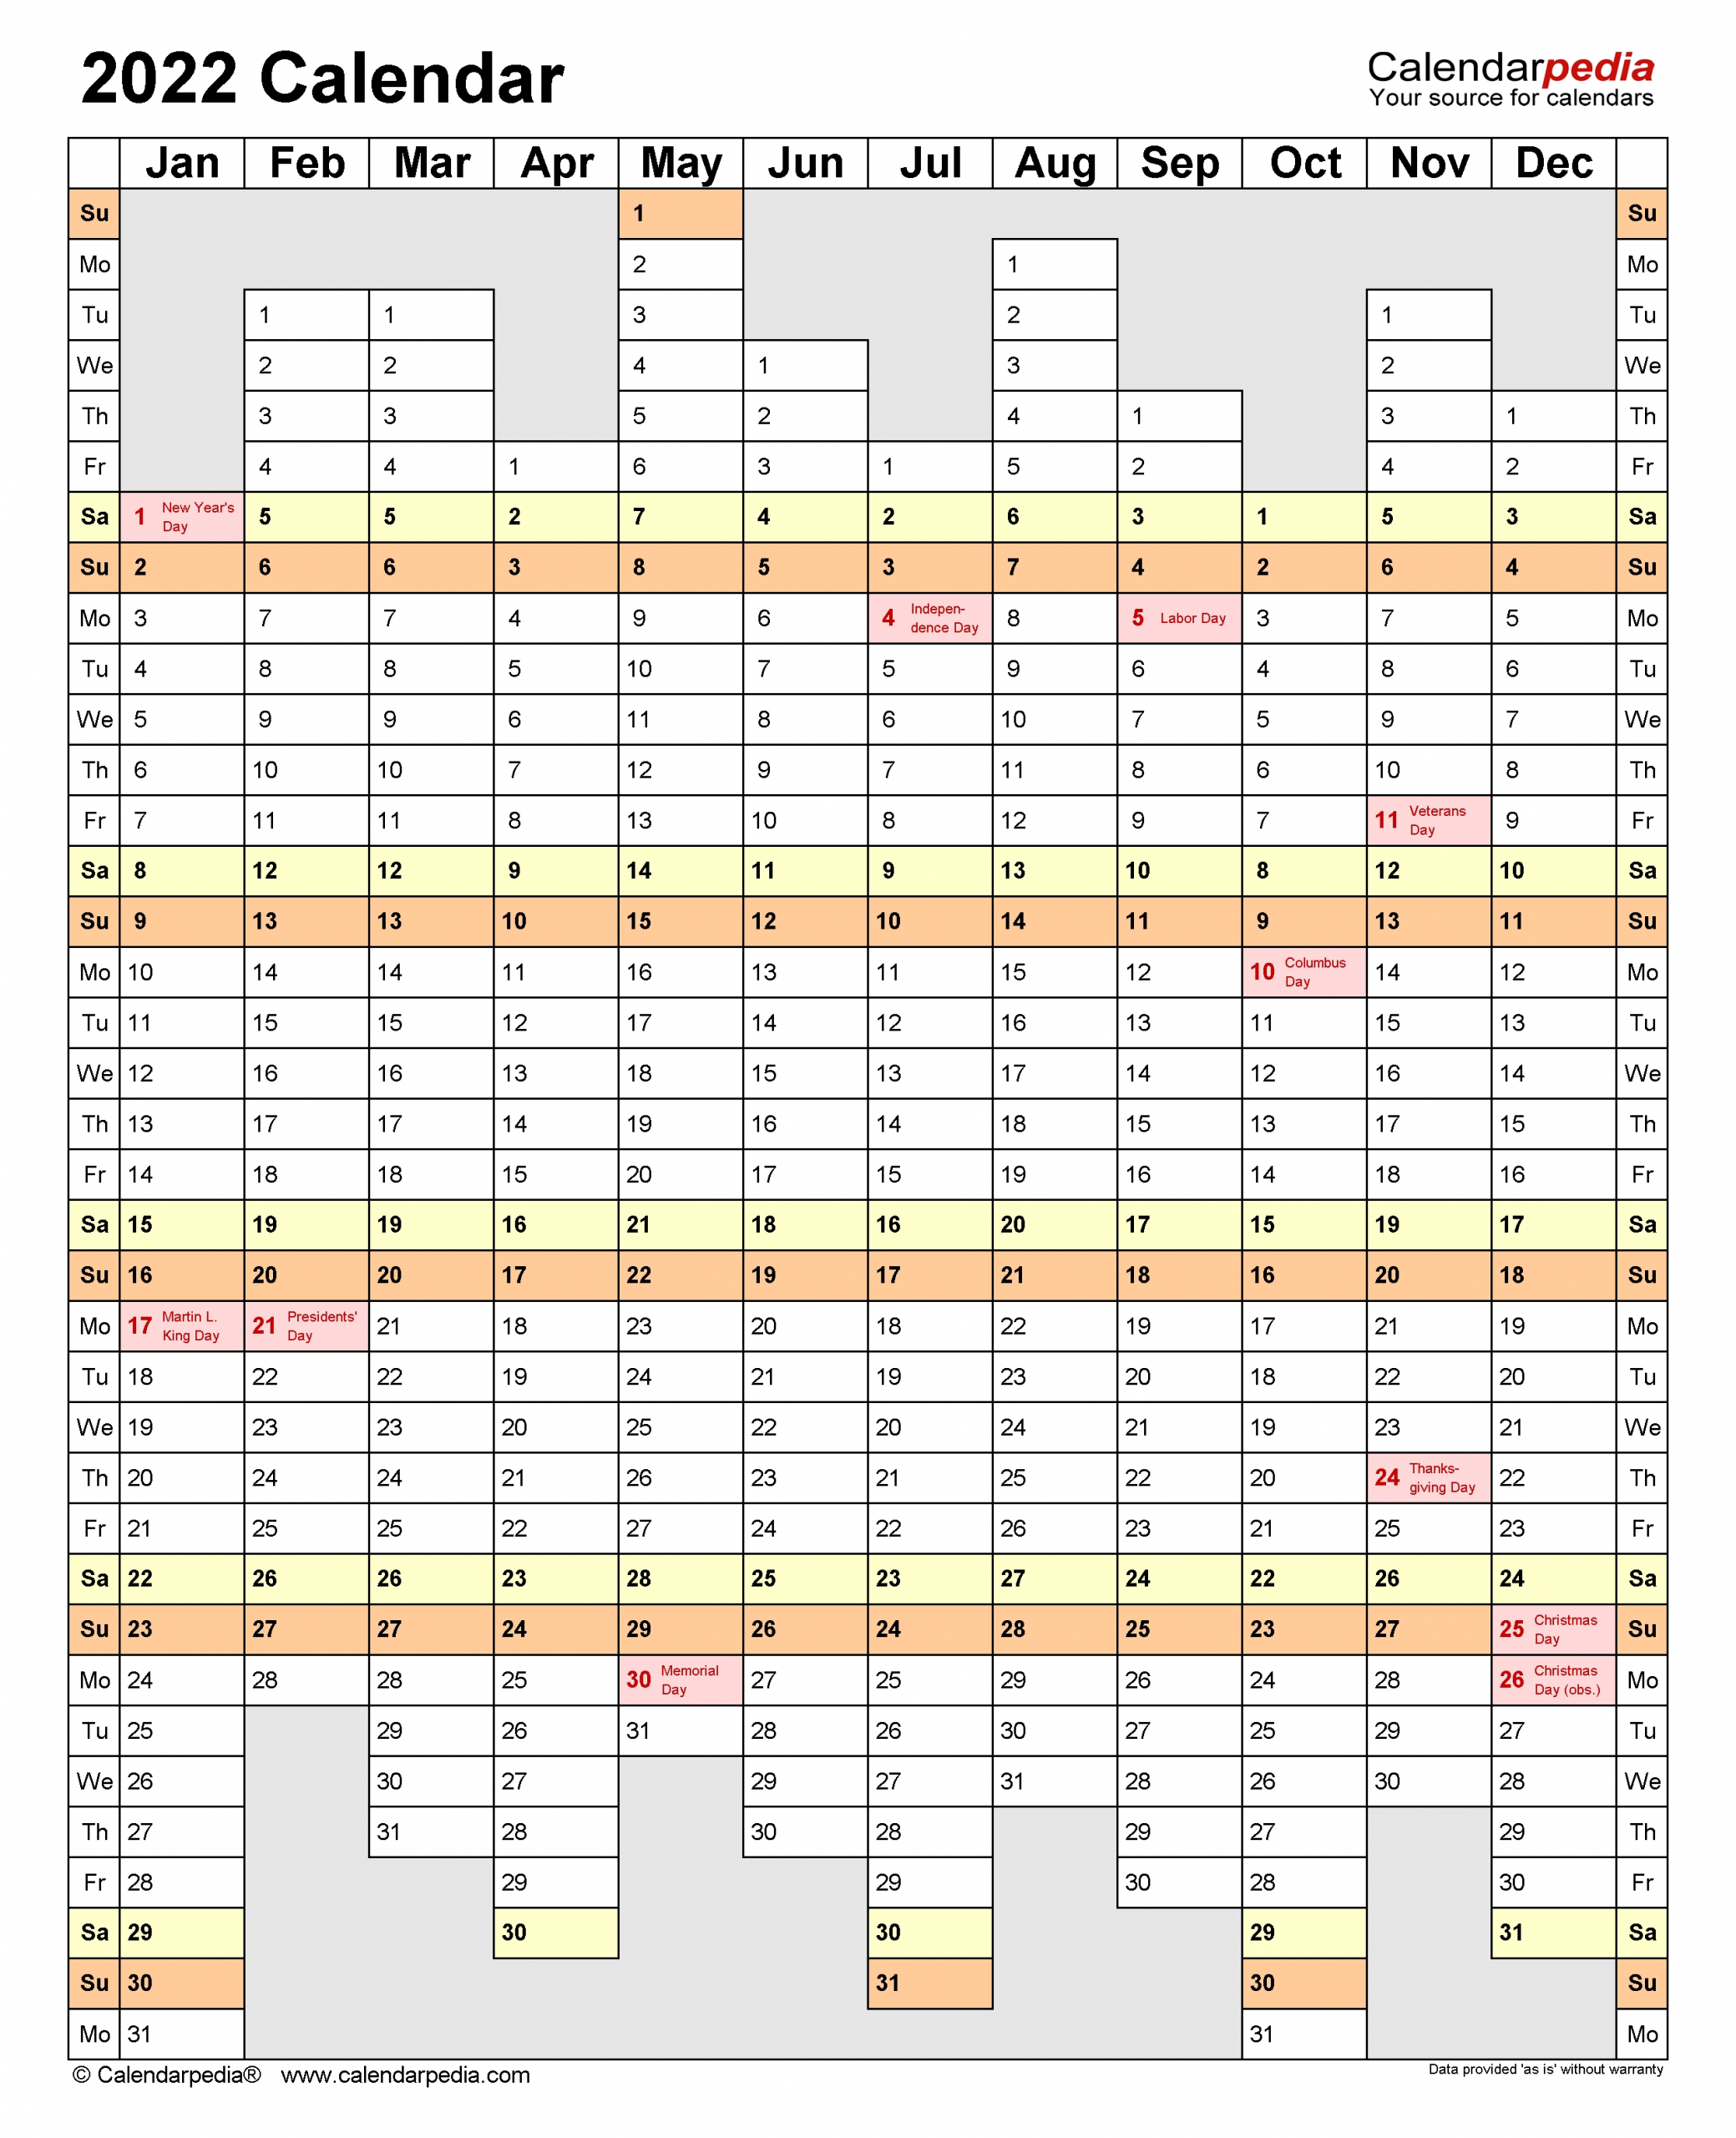 2022 Calendar - Free Printable Excel Templates - Calendarpedia